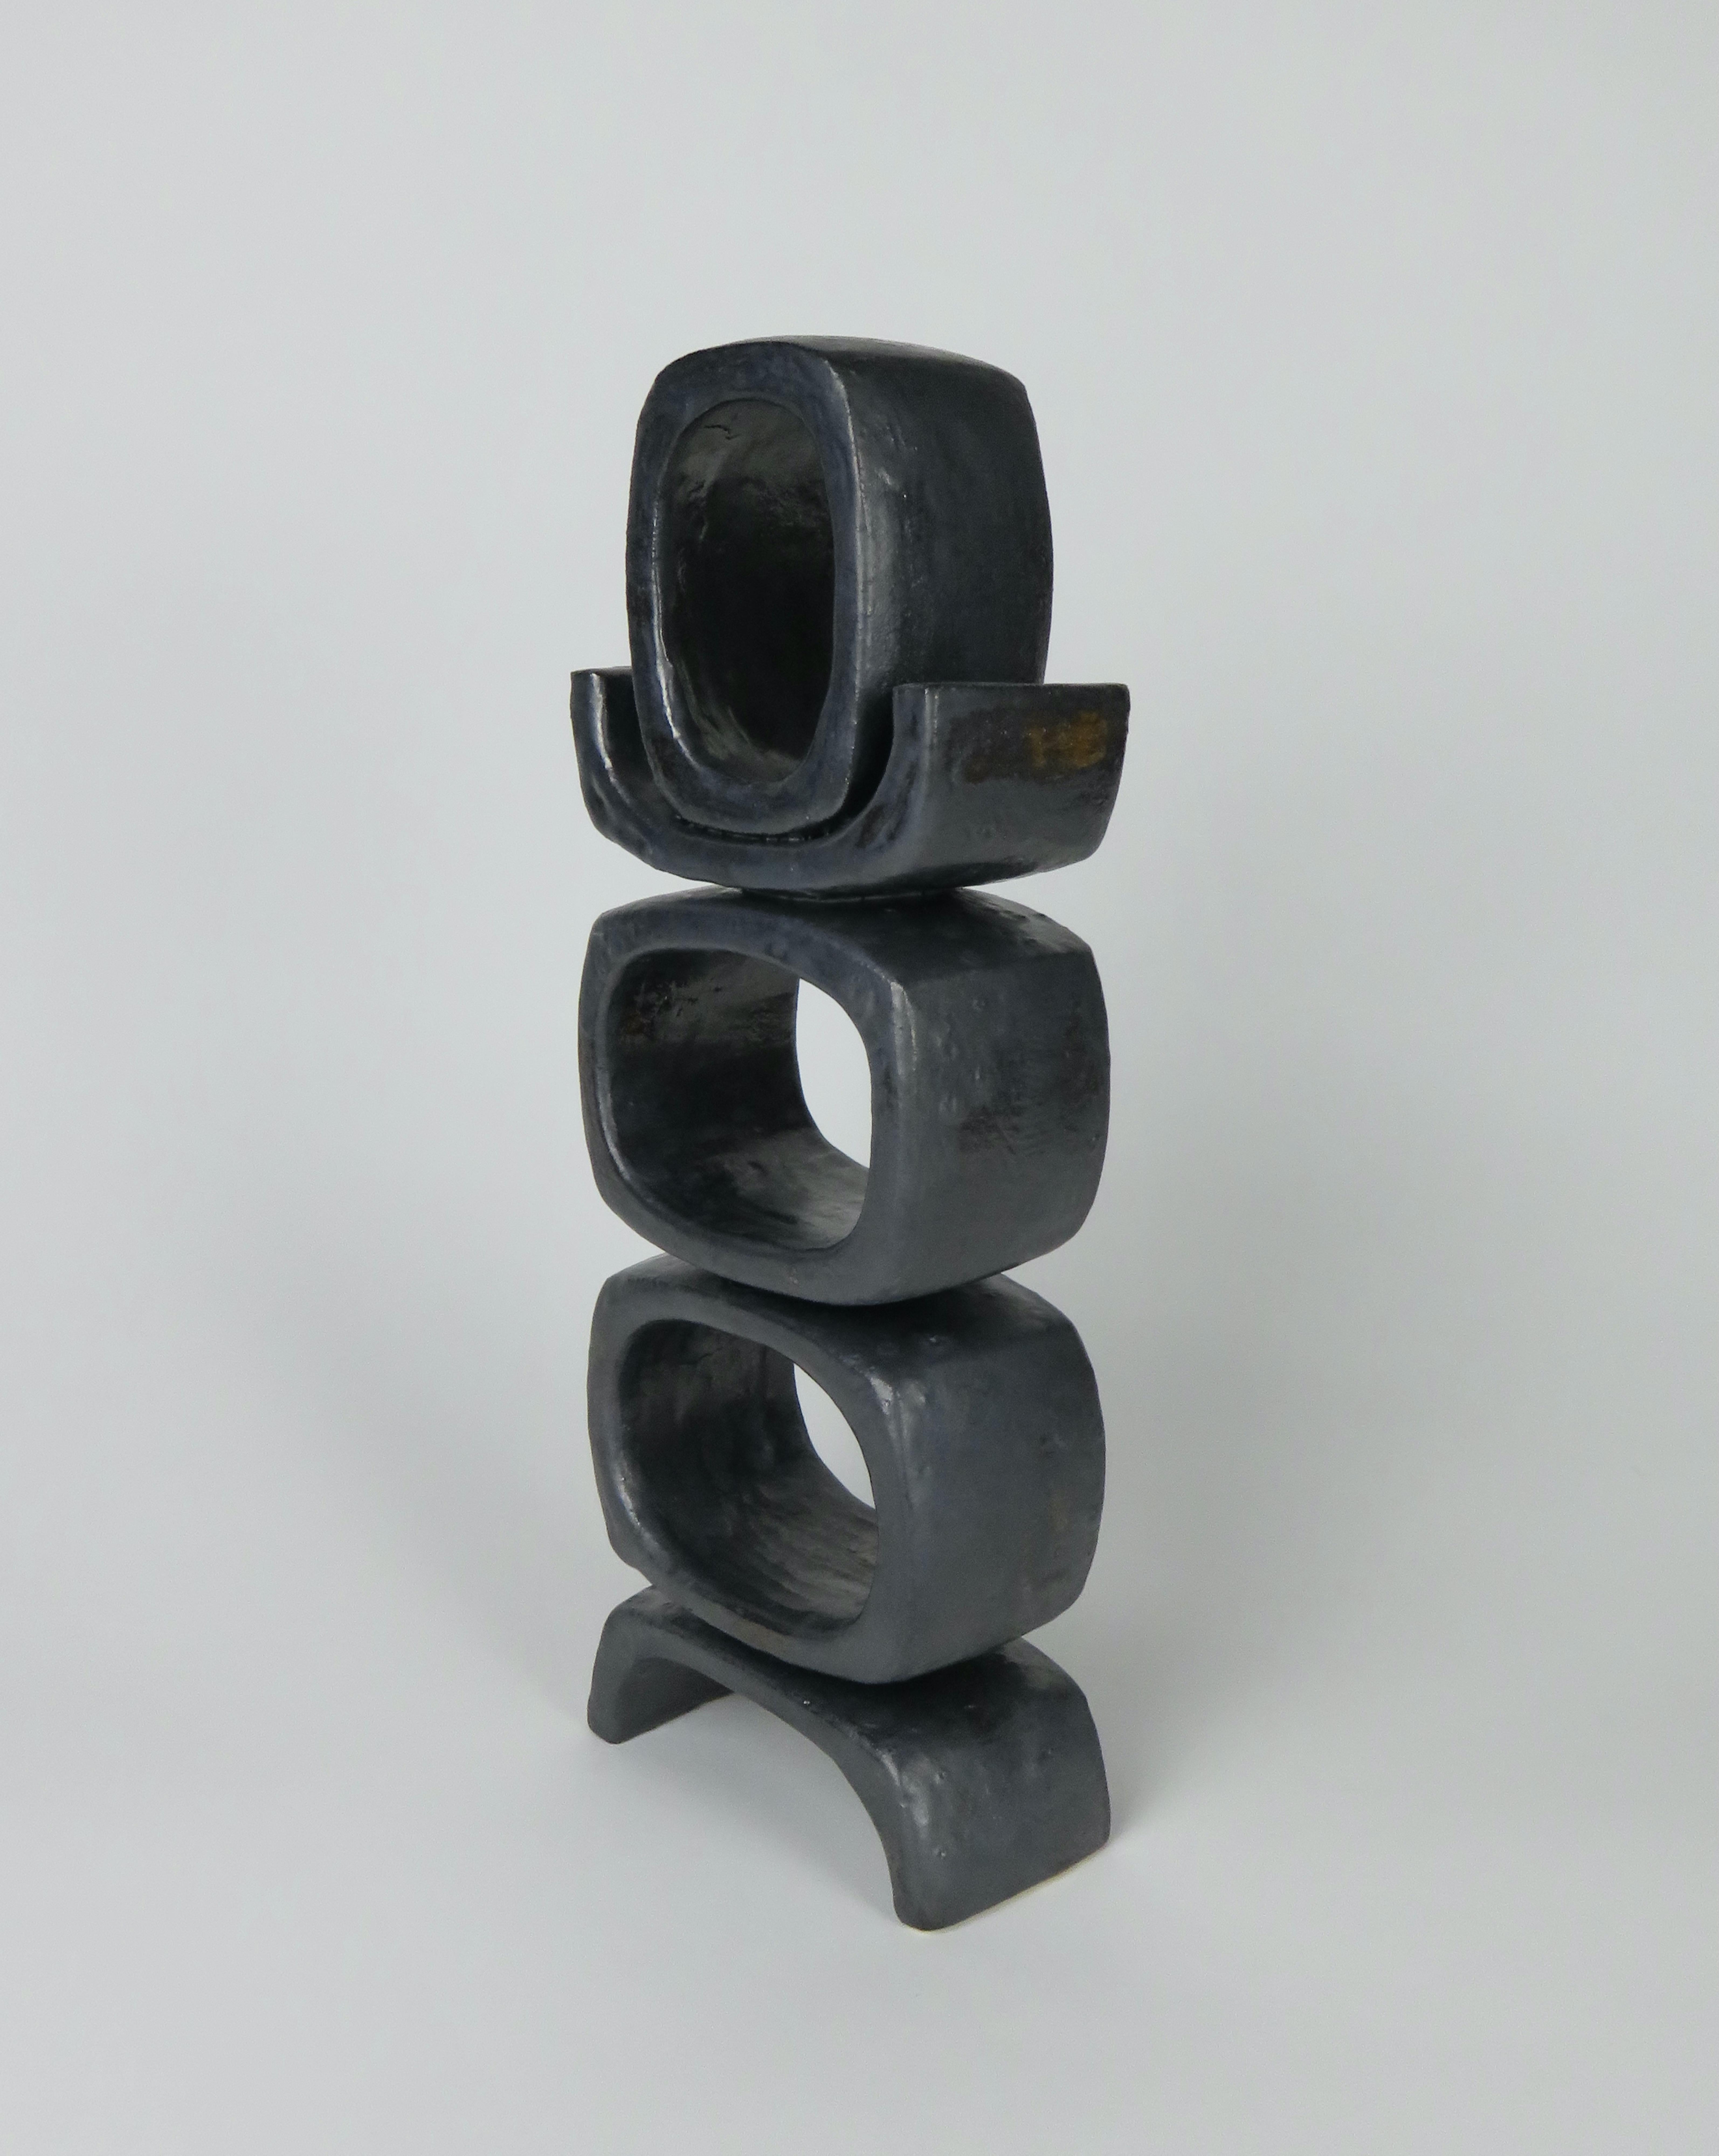 Contemporary 3 Rectangular Ovals, Short Angled Legs, Metallic Black-Glazed Clay Sculpture #1